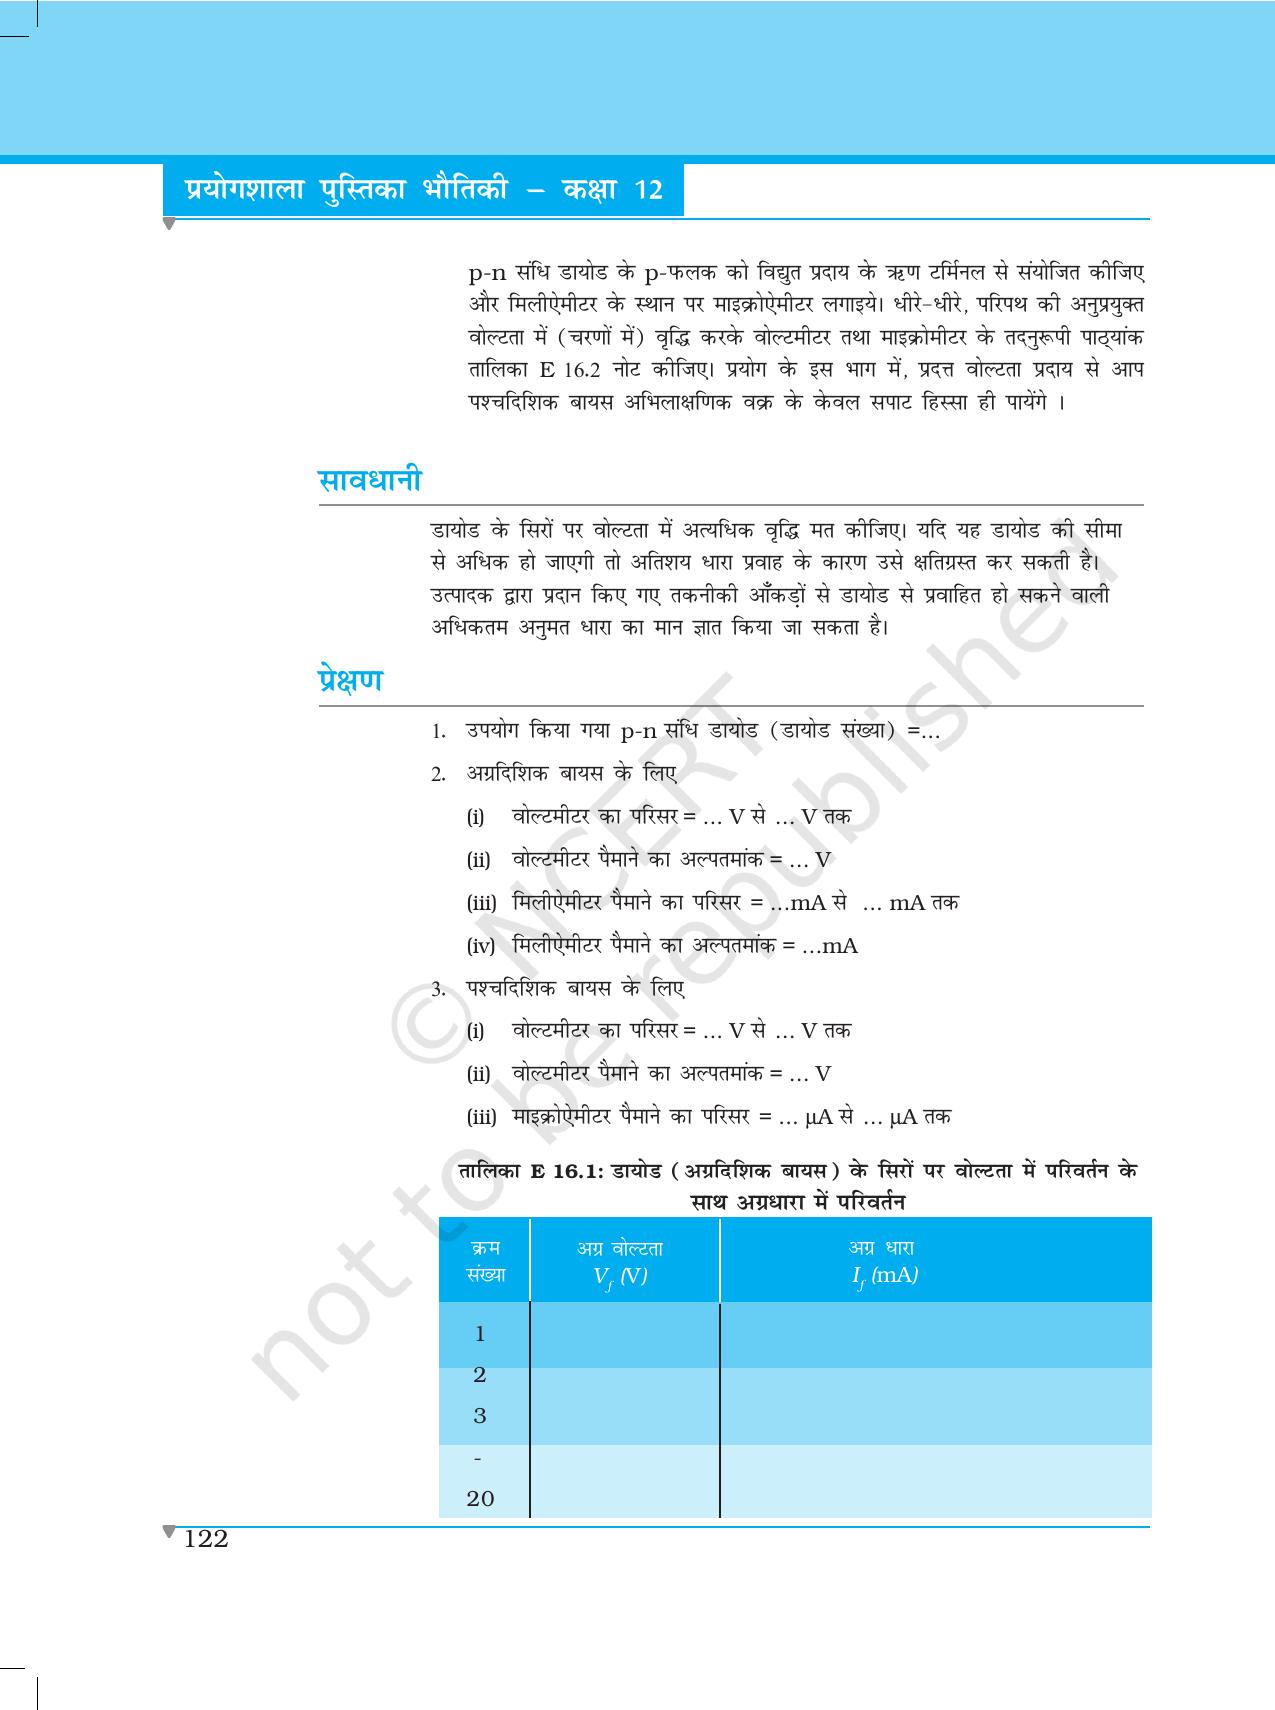 NCERT Laboratory Manuals for Class XII भौतिकी - प्रयोग (14 - 18) - Page 18